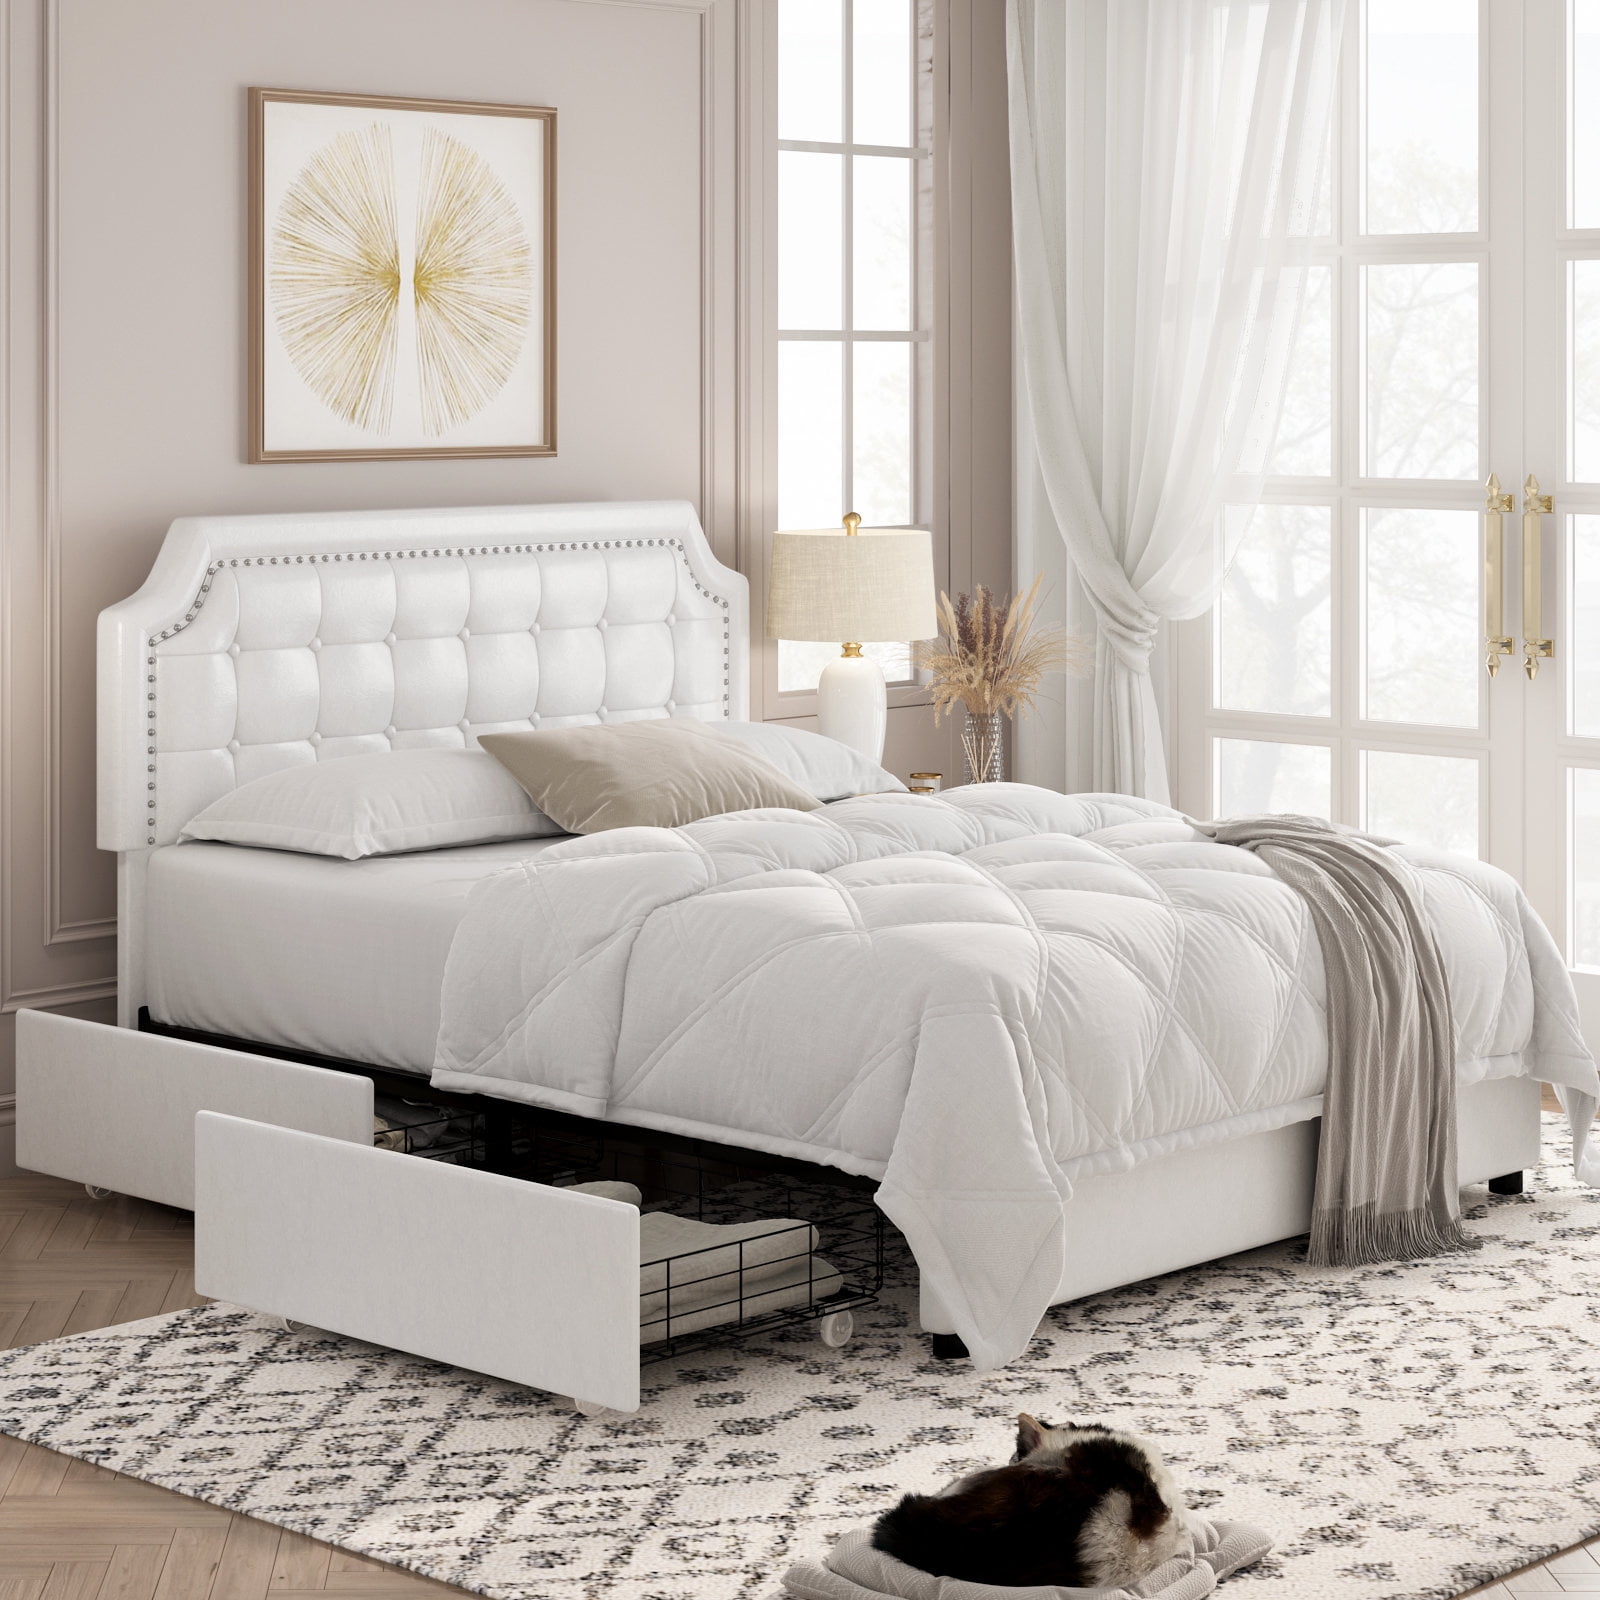 Homfa Full Size Storage Bed, 4 Drawers PU Leather Platform Bed Frame ...